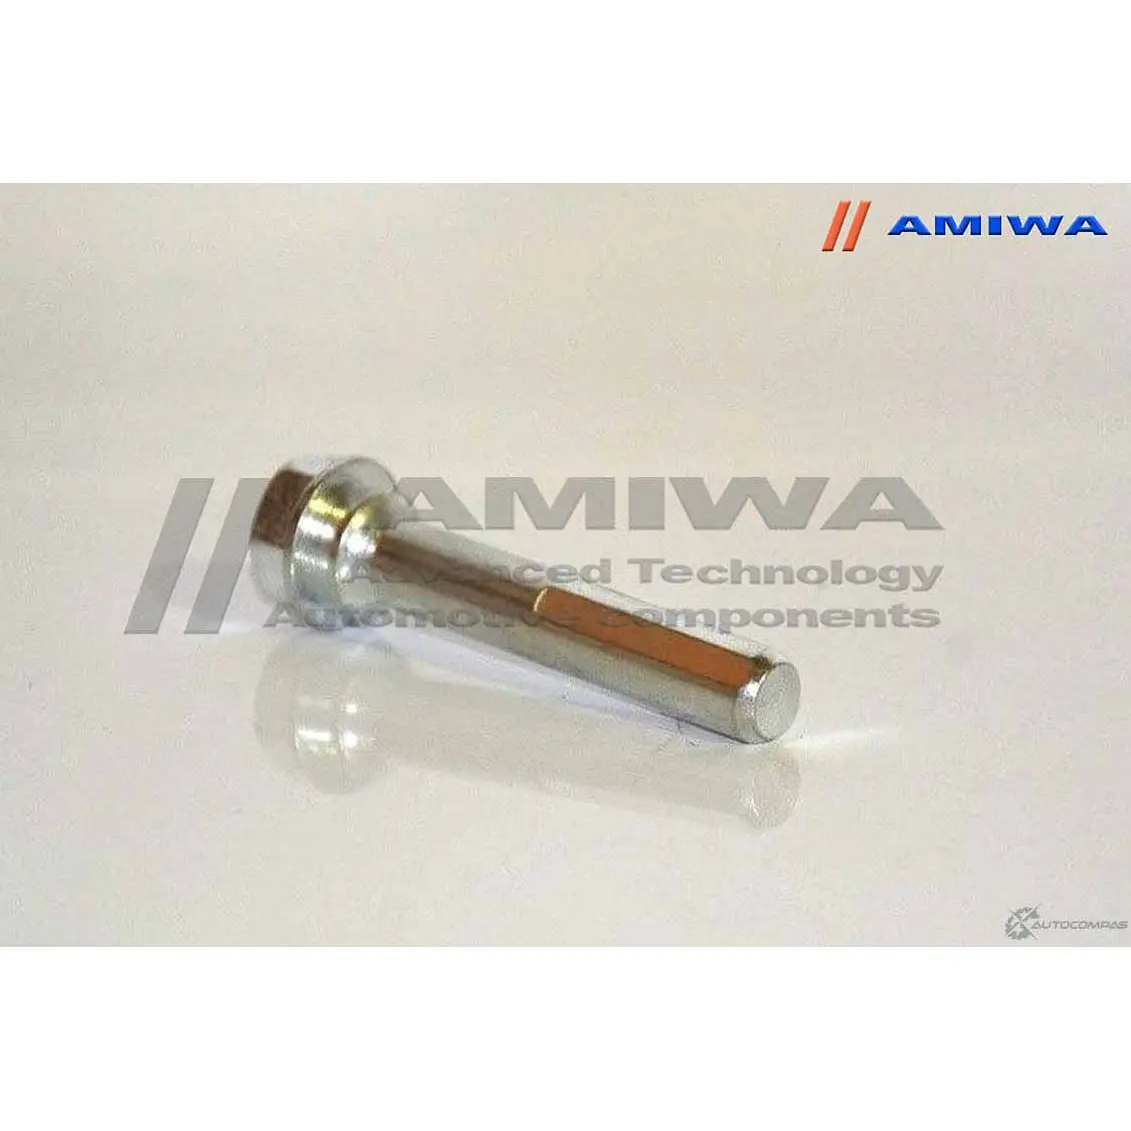 Направляющая суппорта AMIWA V8 WL73D 03-35-896 1422491715 RO2UV9K изображение 0